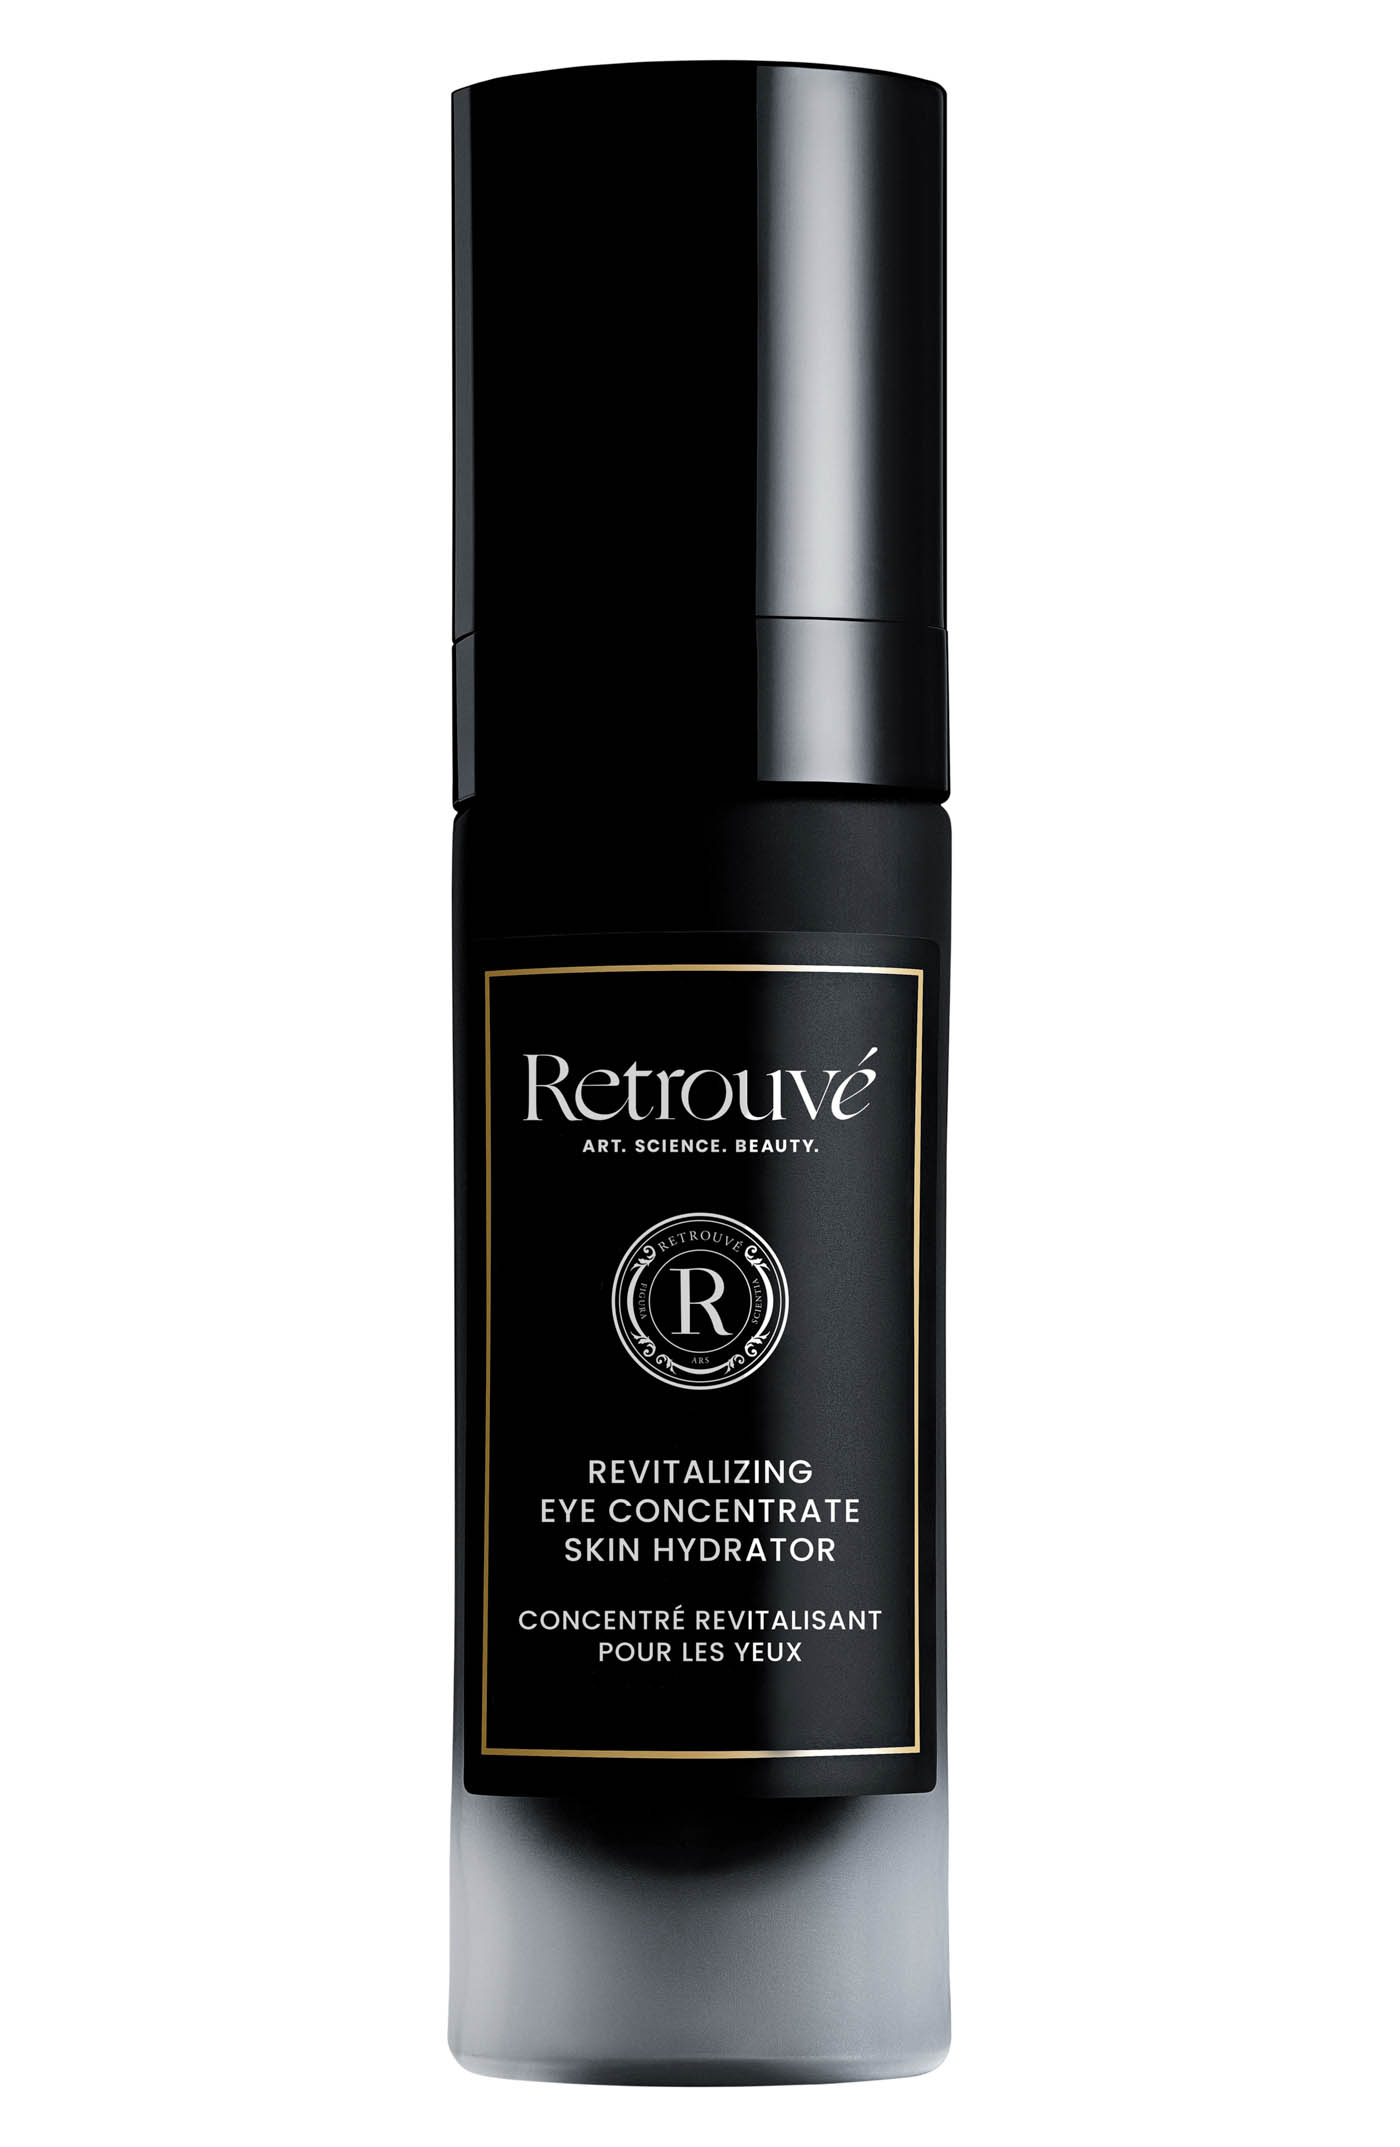 26 Retrouve, Revitalizing Eye Concentrate Skin Hydrator, Nordstrom.com